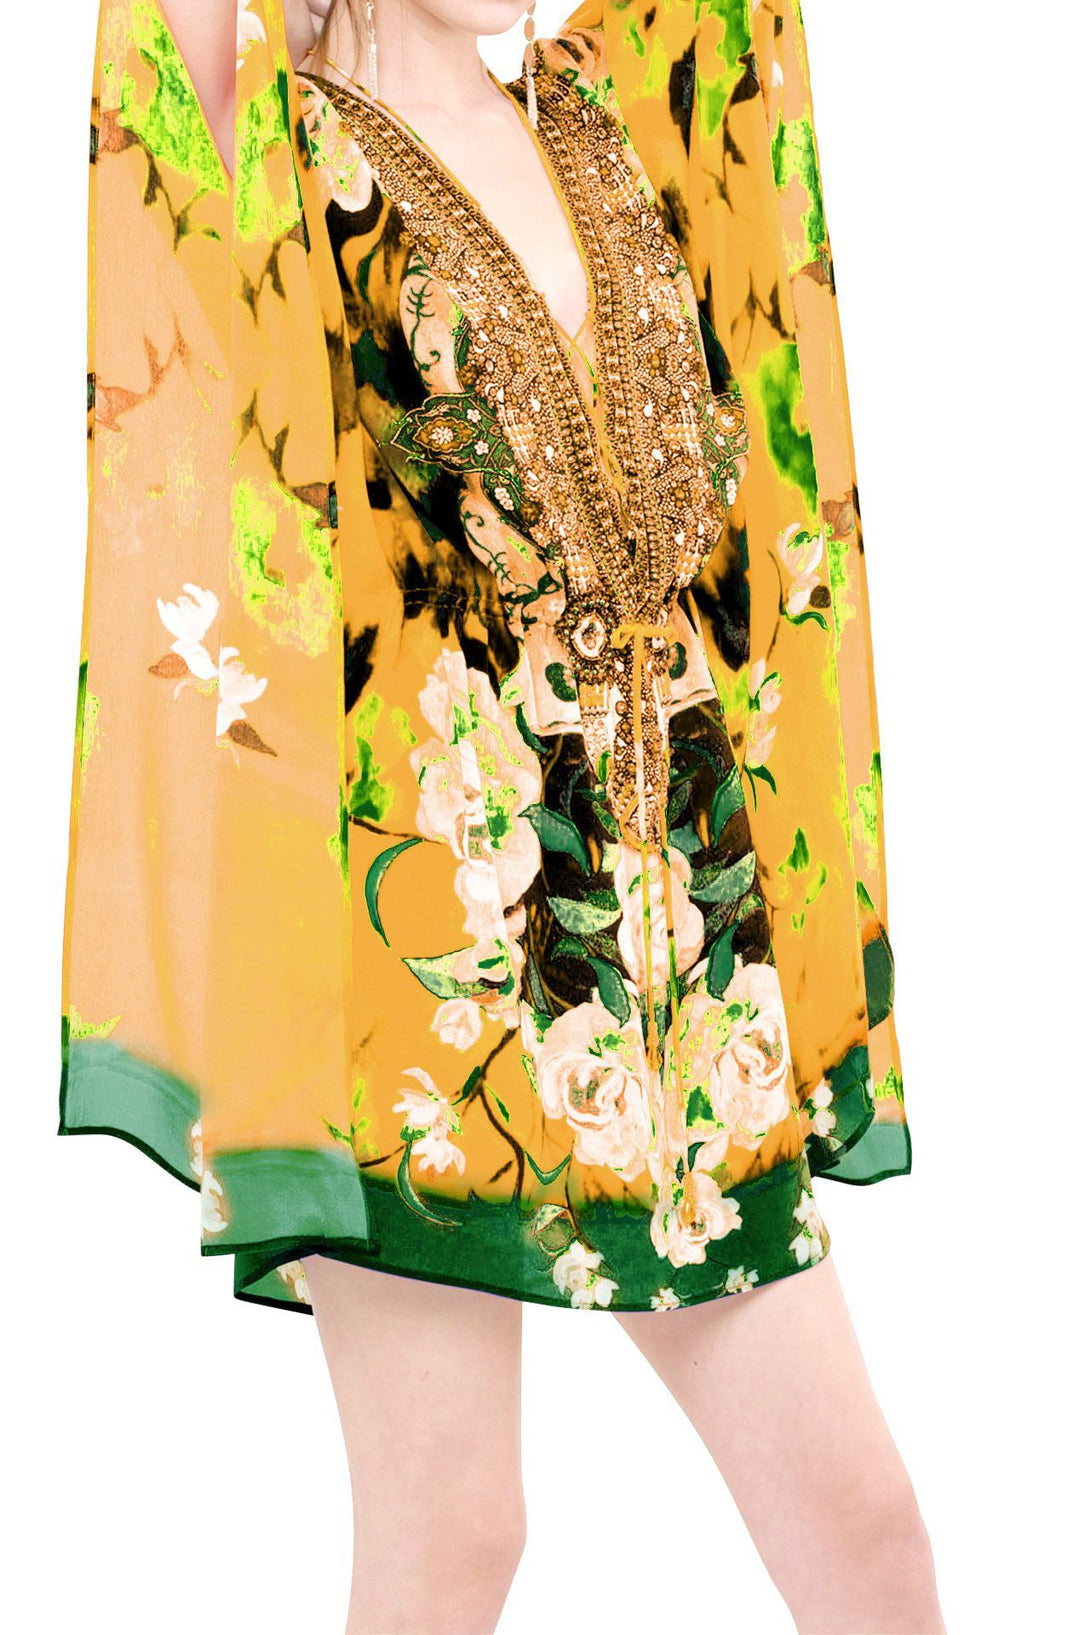  caftans for plus size, silk caftan dress, Shahida Parides, caftans for women,